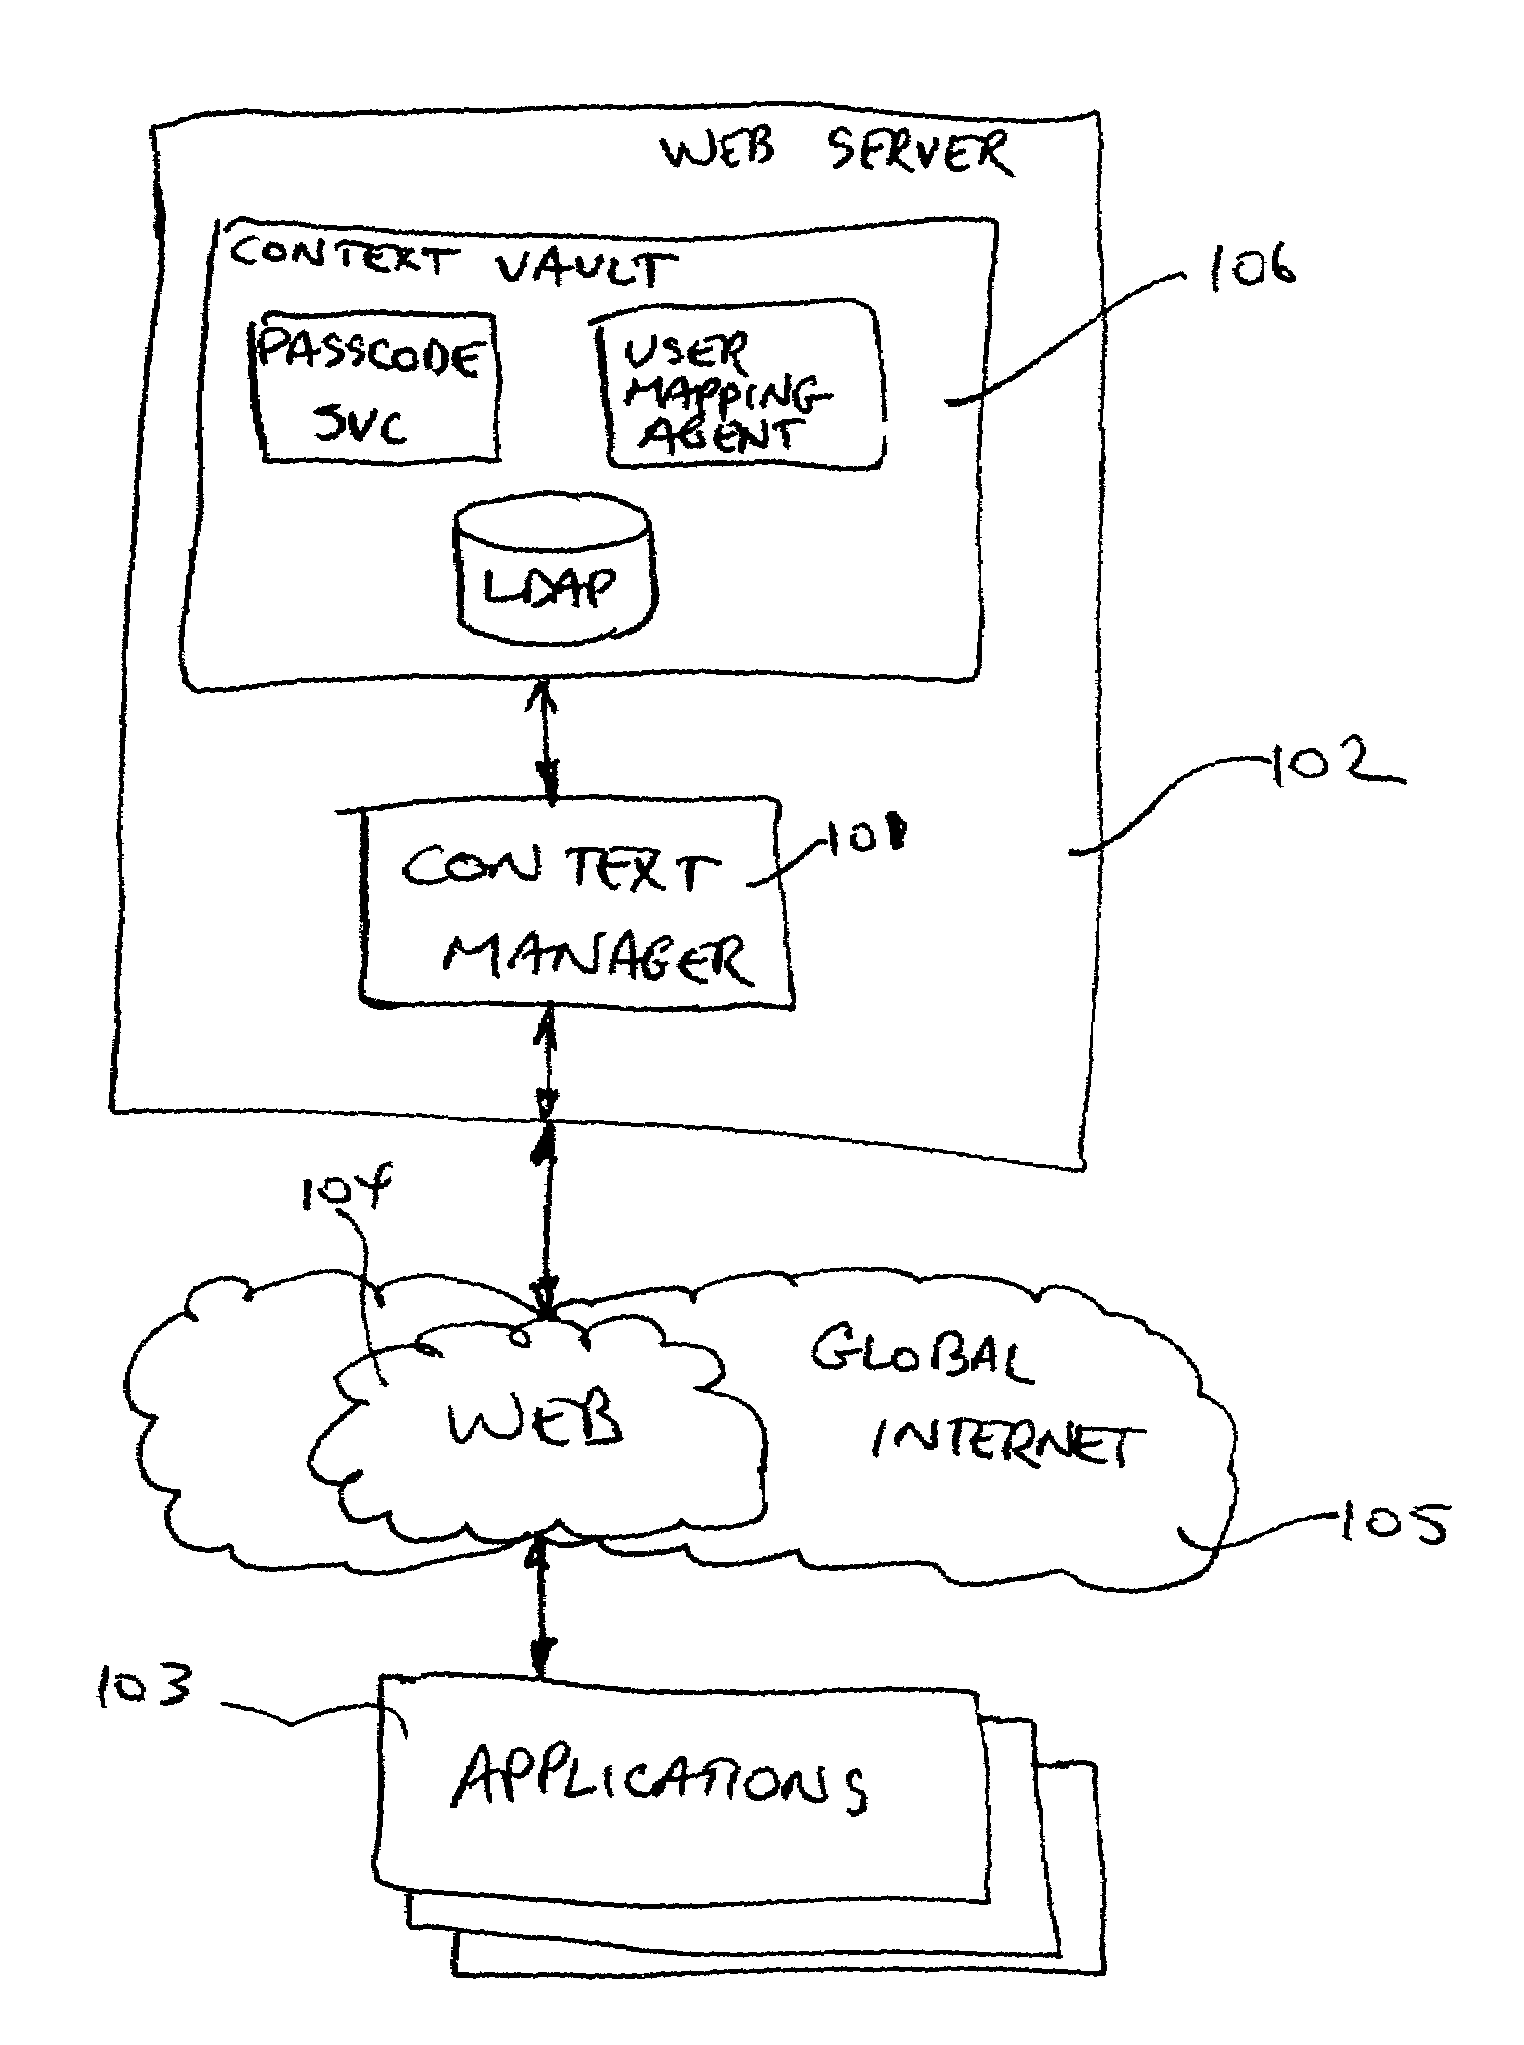 Context management server appliance